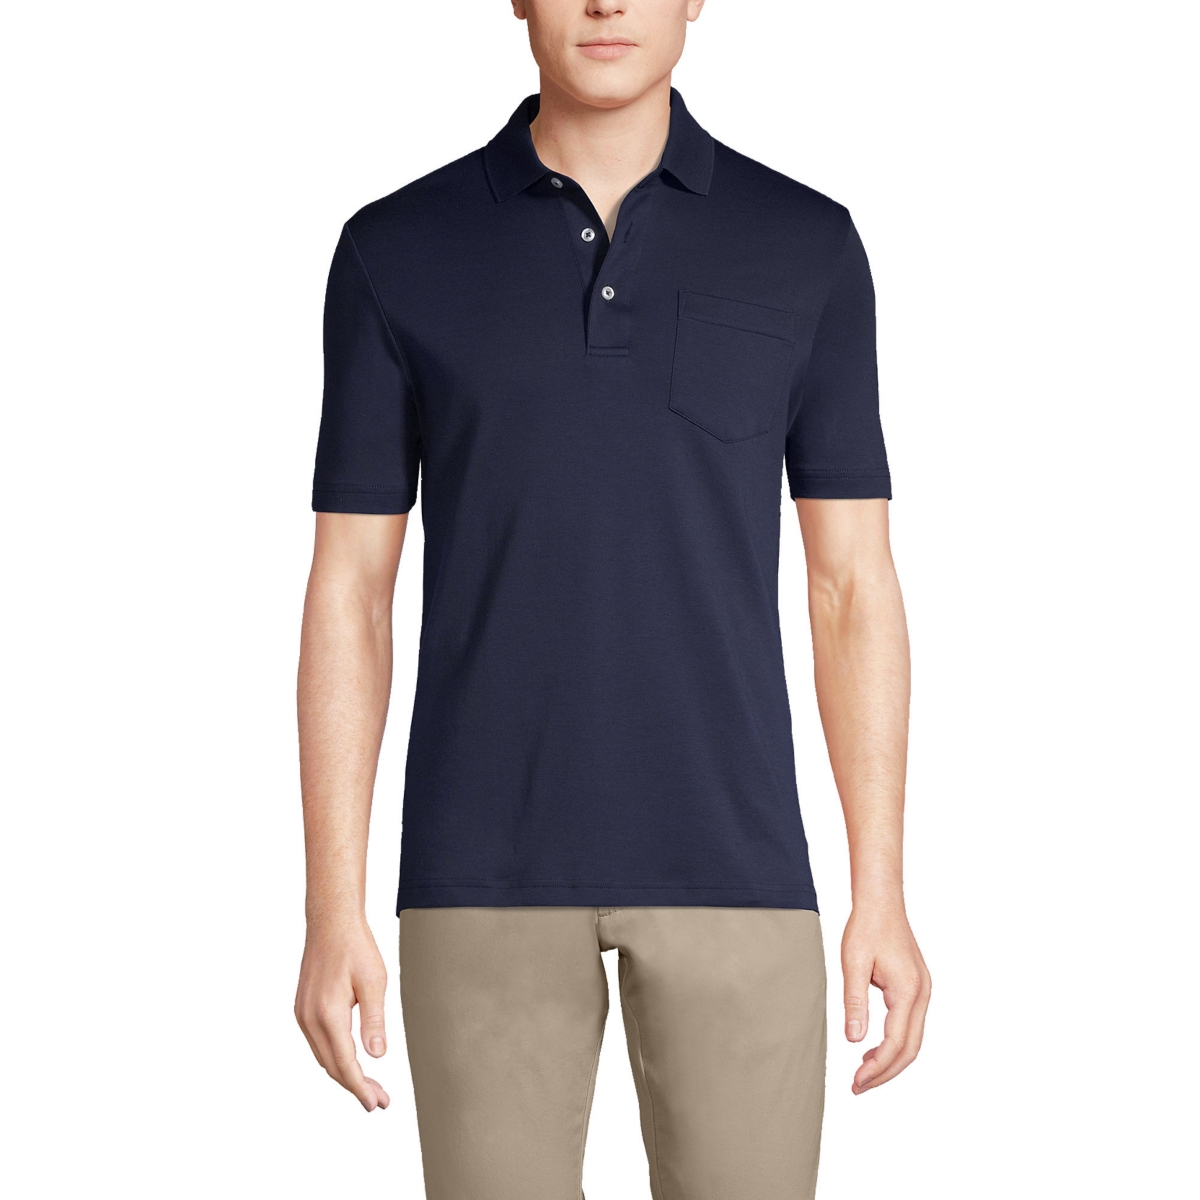 Men's Short Sleeve Cotton Supima Polo Shirt with Pocket - Baltic teal